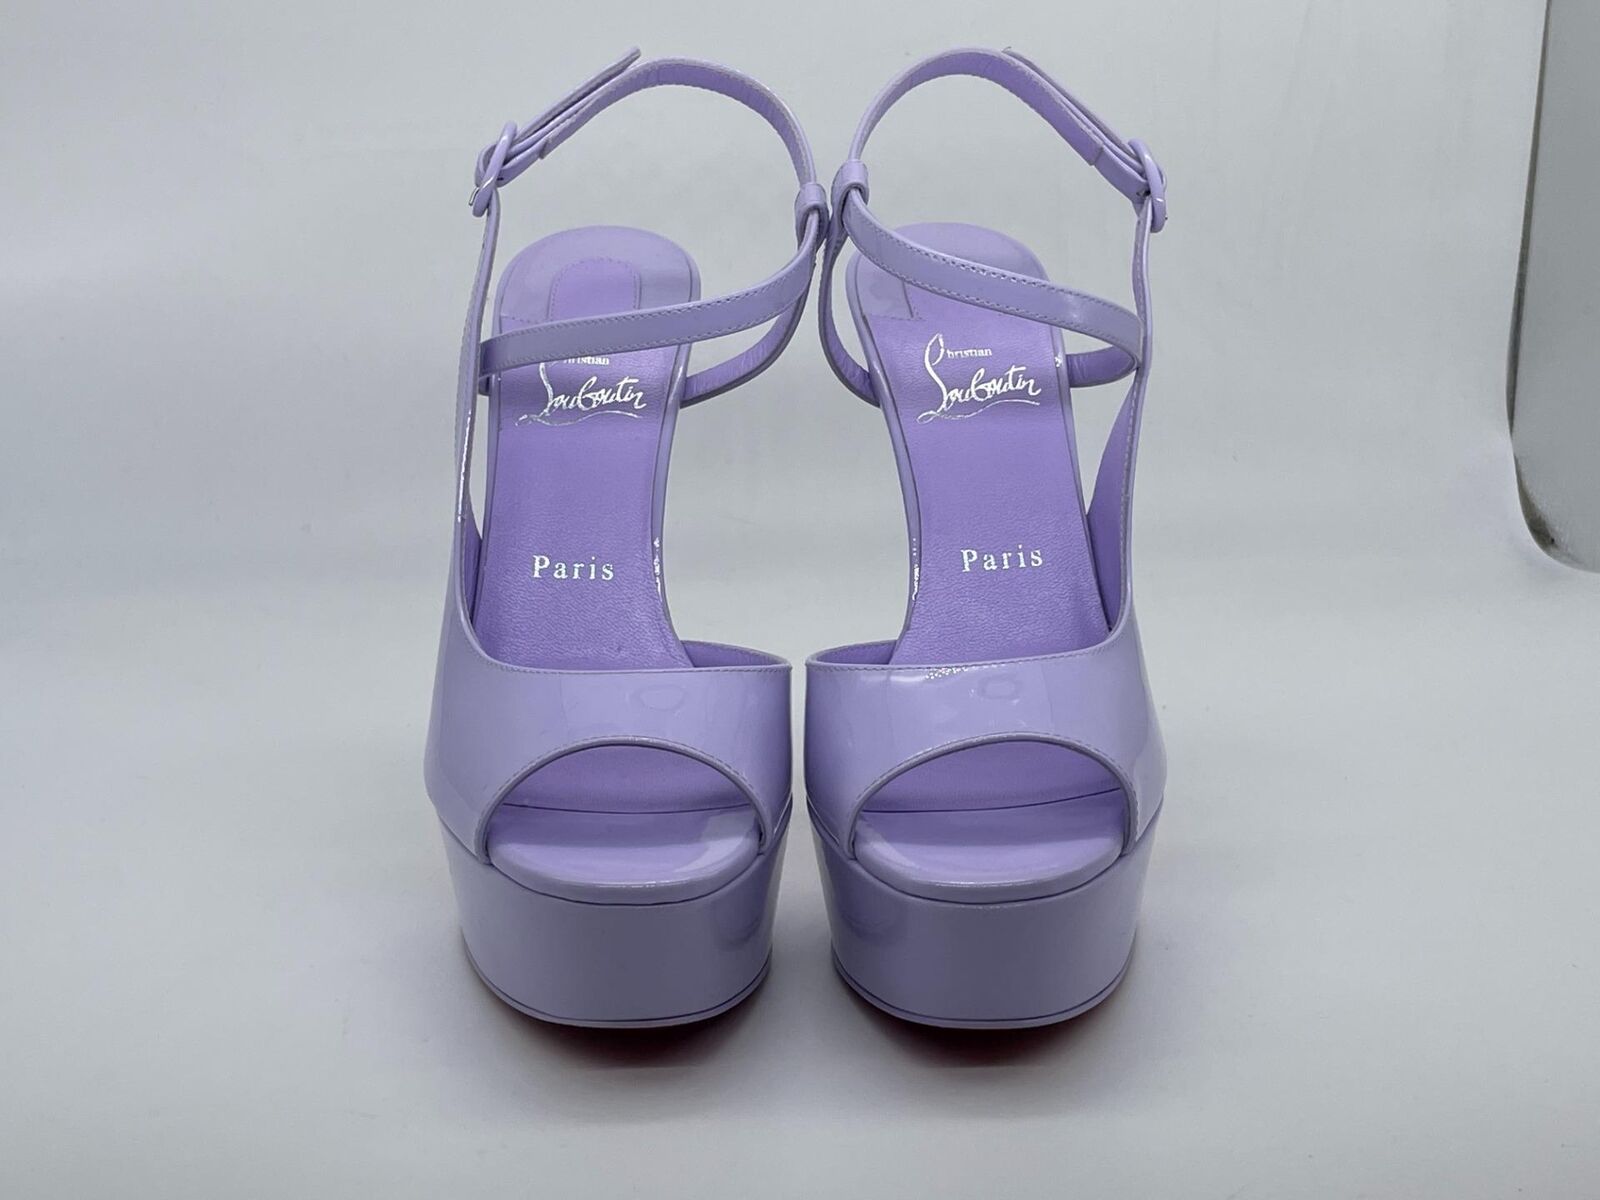 Christian Louboutin SO JENLOVE ALTA 150 Patent Heels Pumps Shoes 